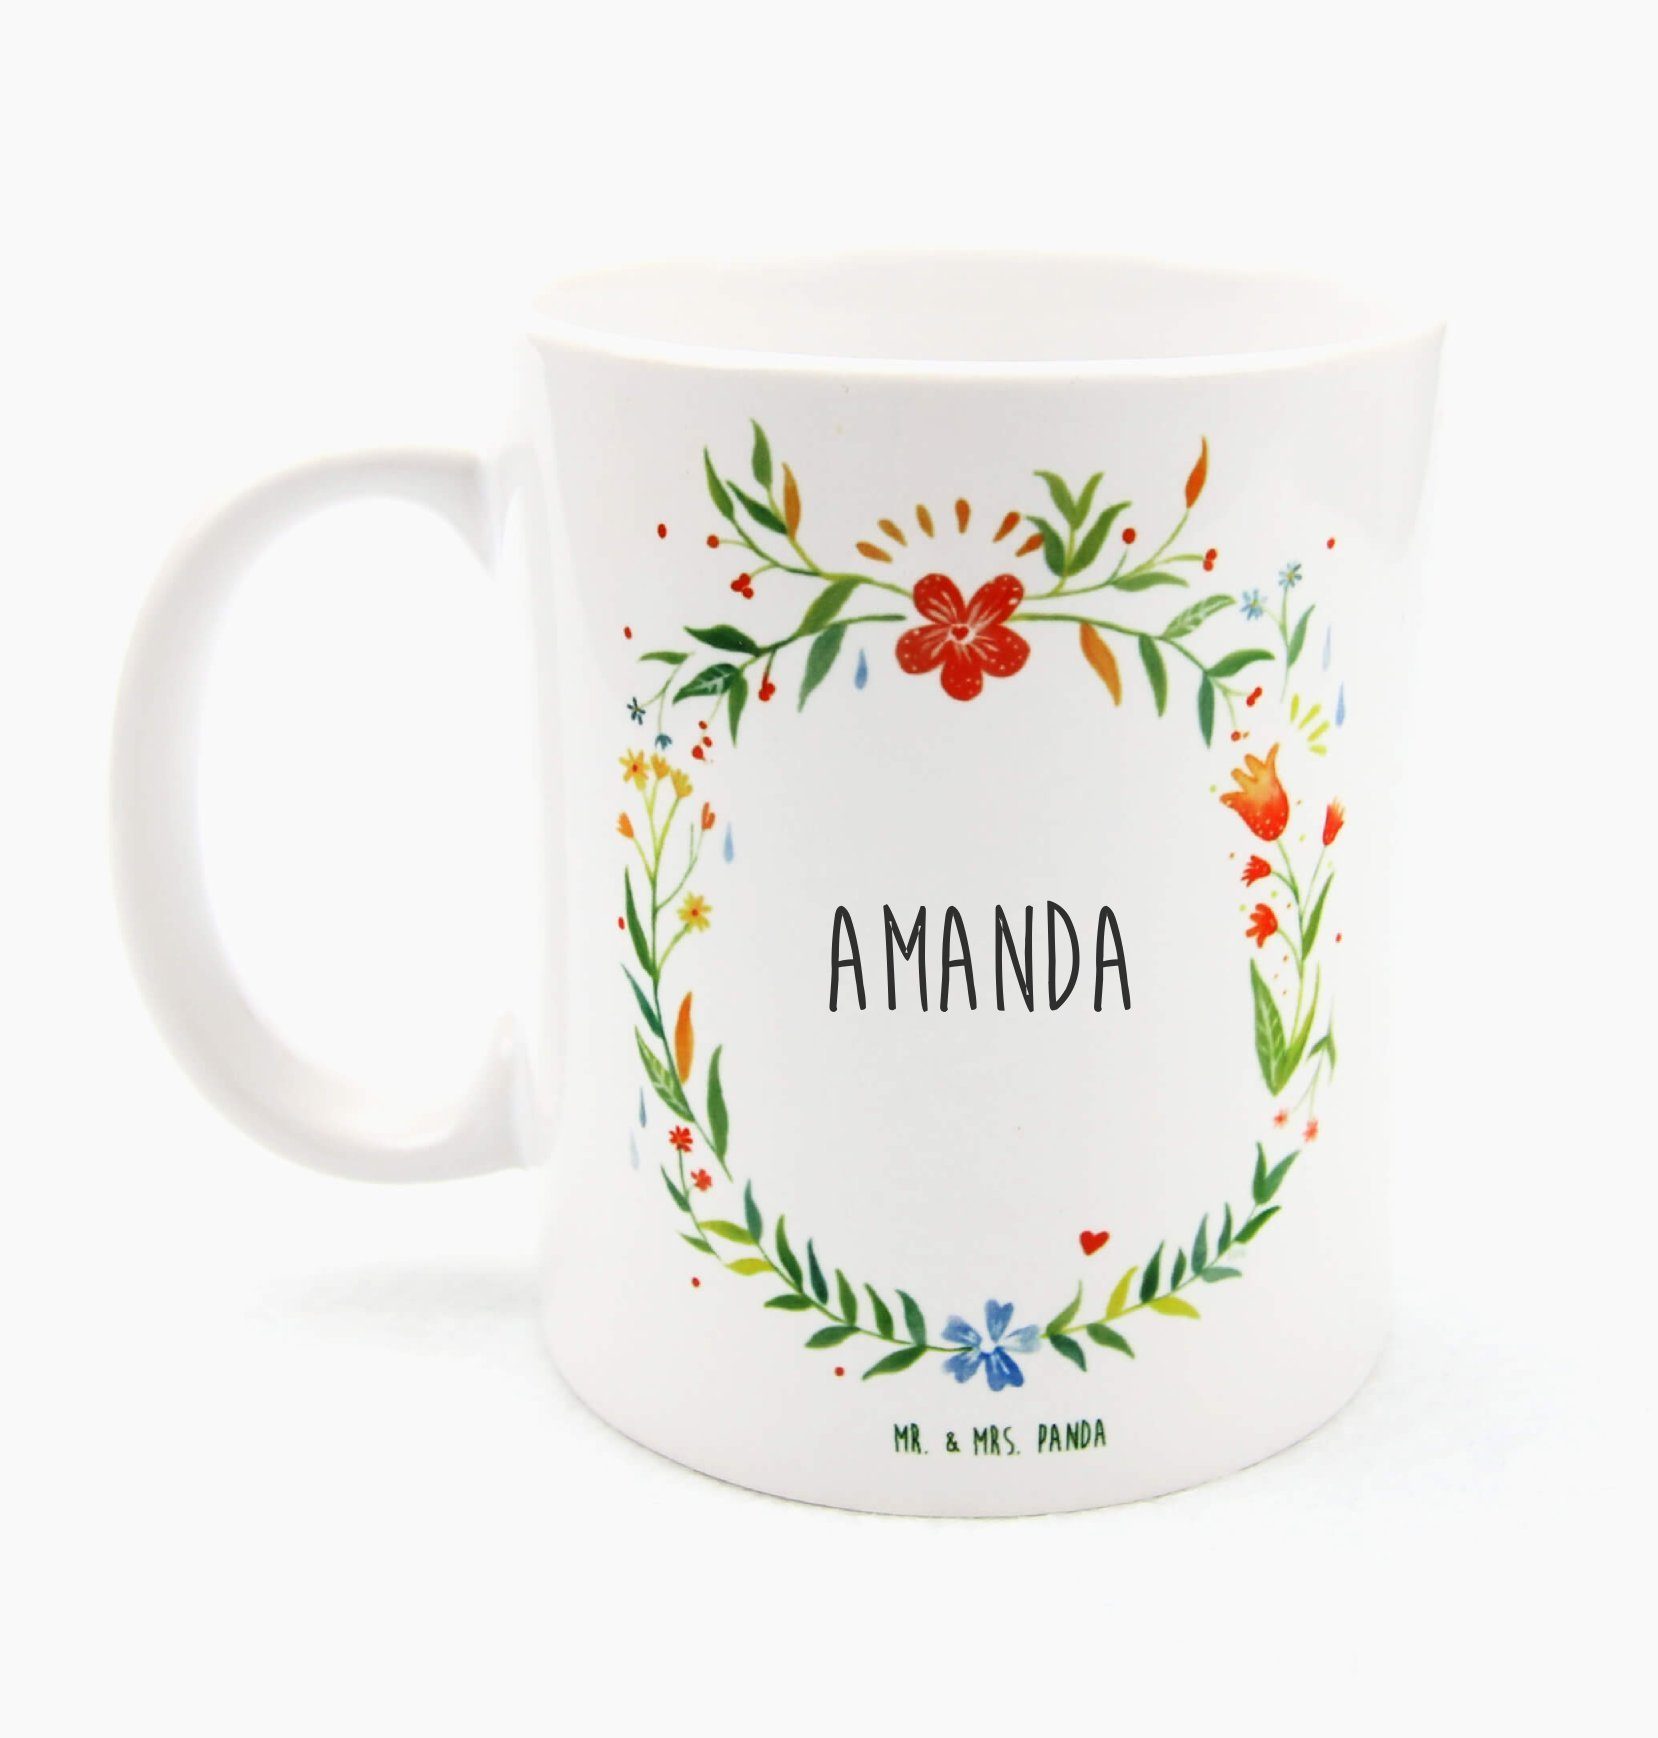 Mr. & Mrs. Panda Tasse Amanda - Geschenk, Büro Tasse, Kaffeebecher, Porzellantasse, Becher, Keramik